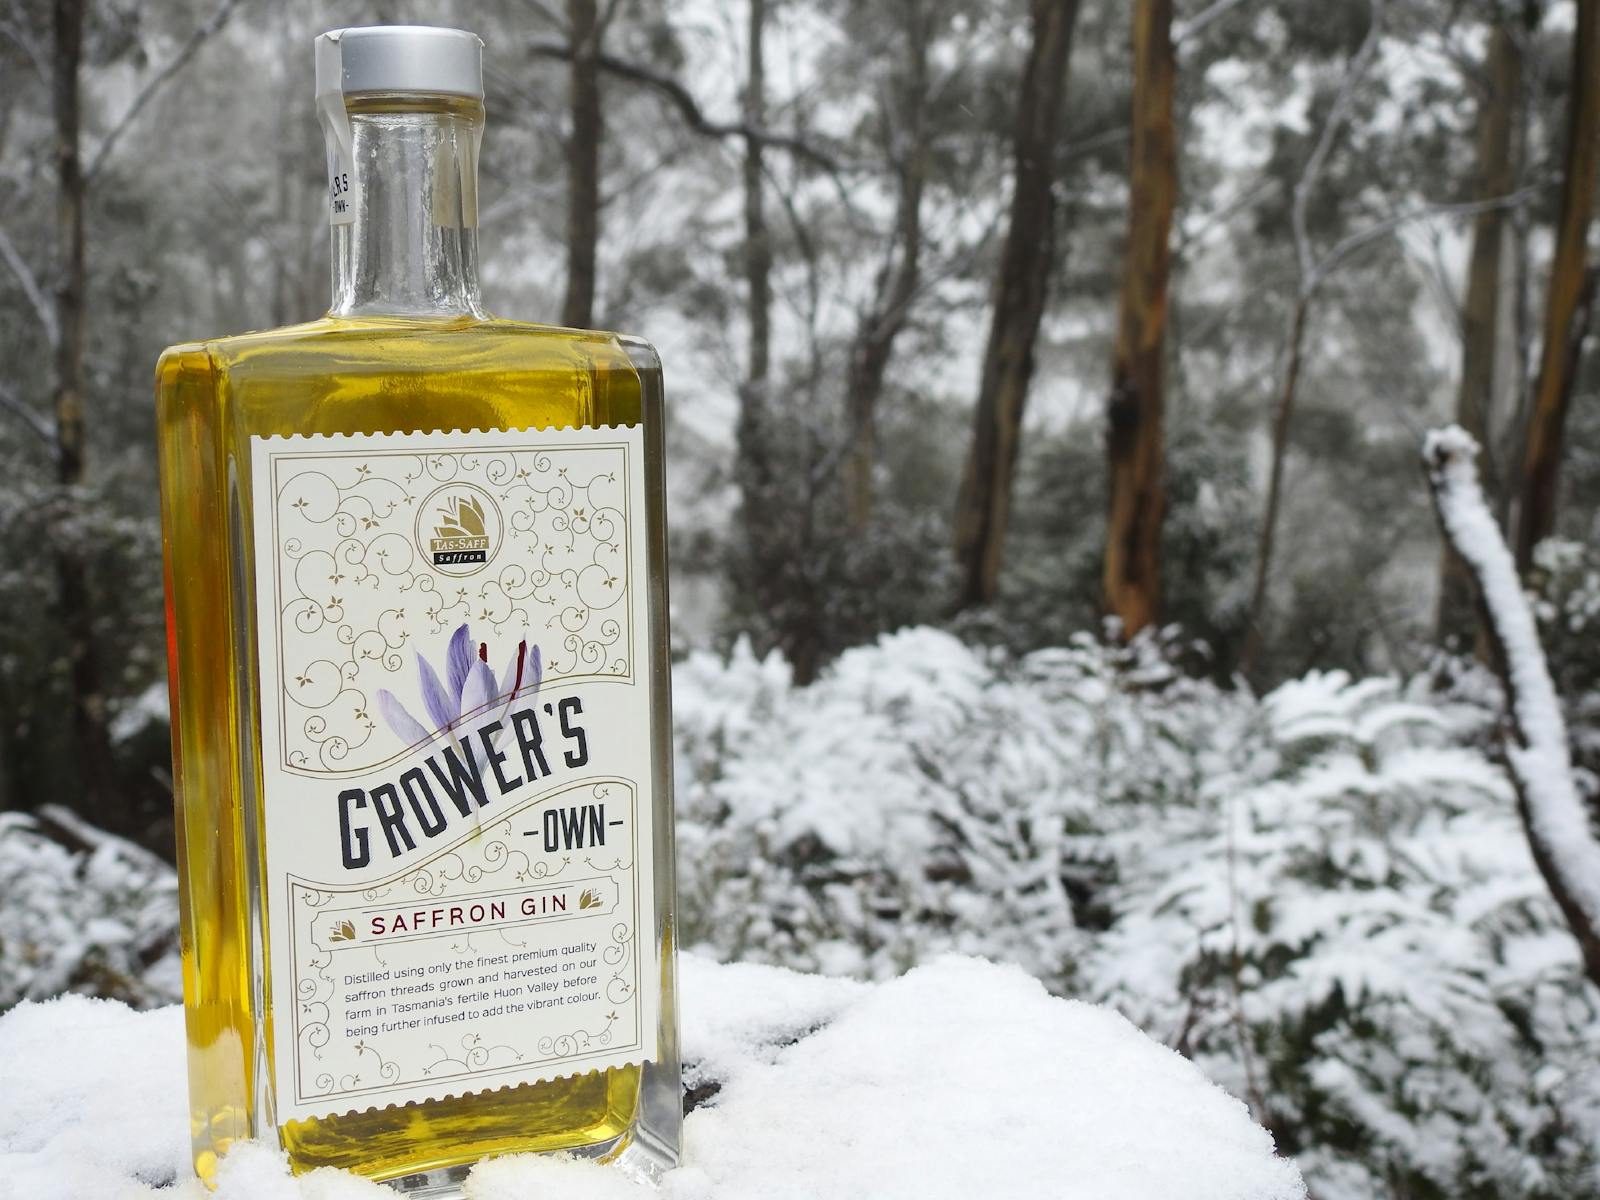 Tas-Saff Grower's Own saffron gin sitting on a log in the snow